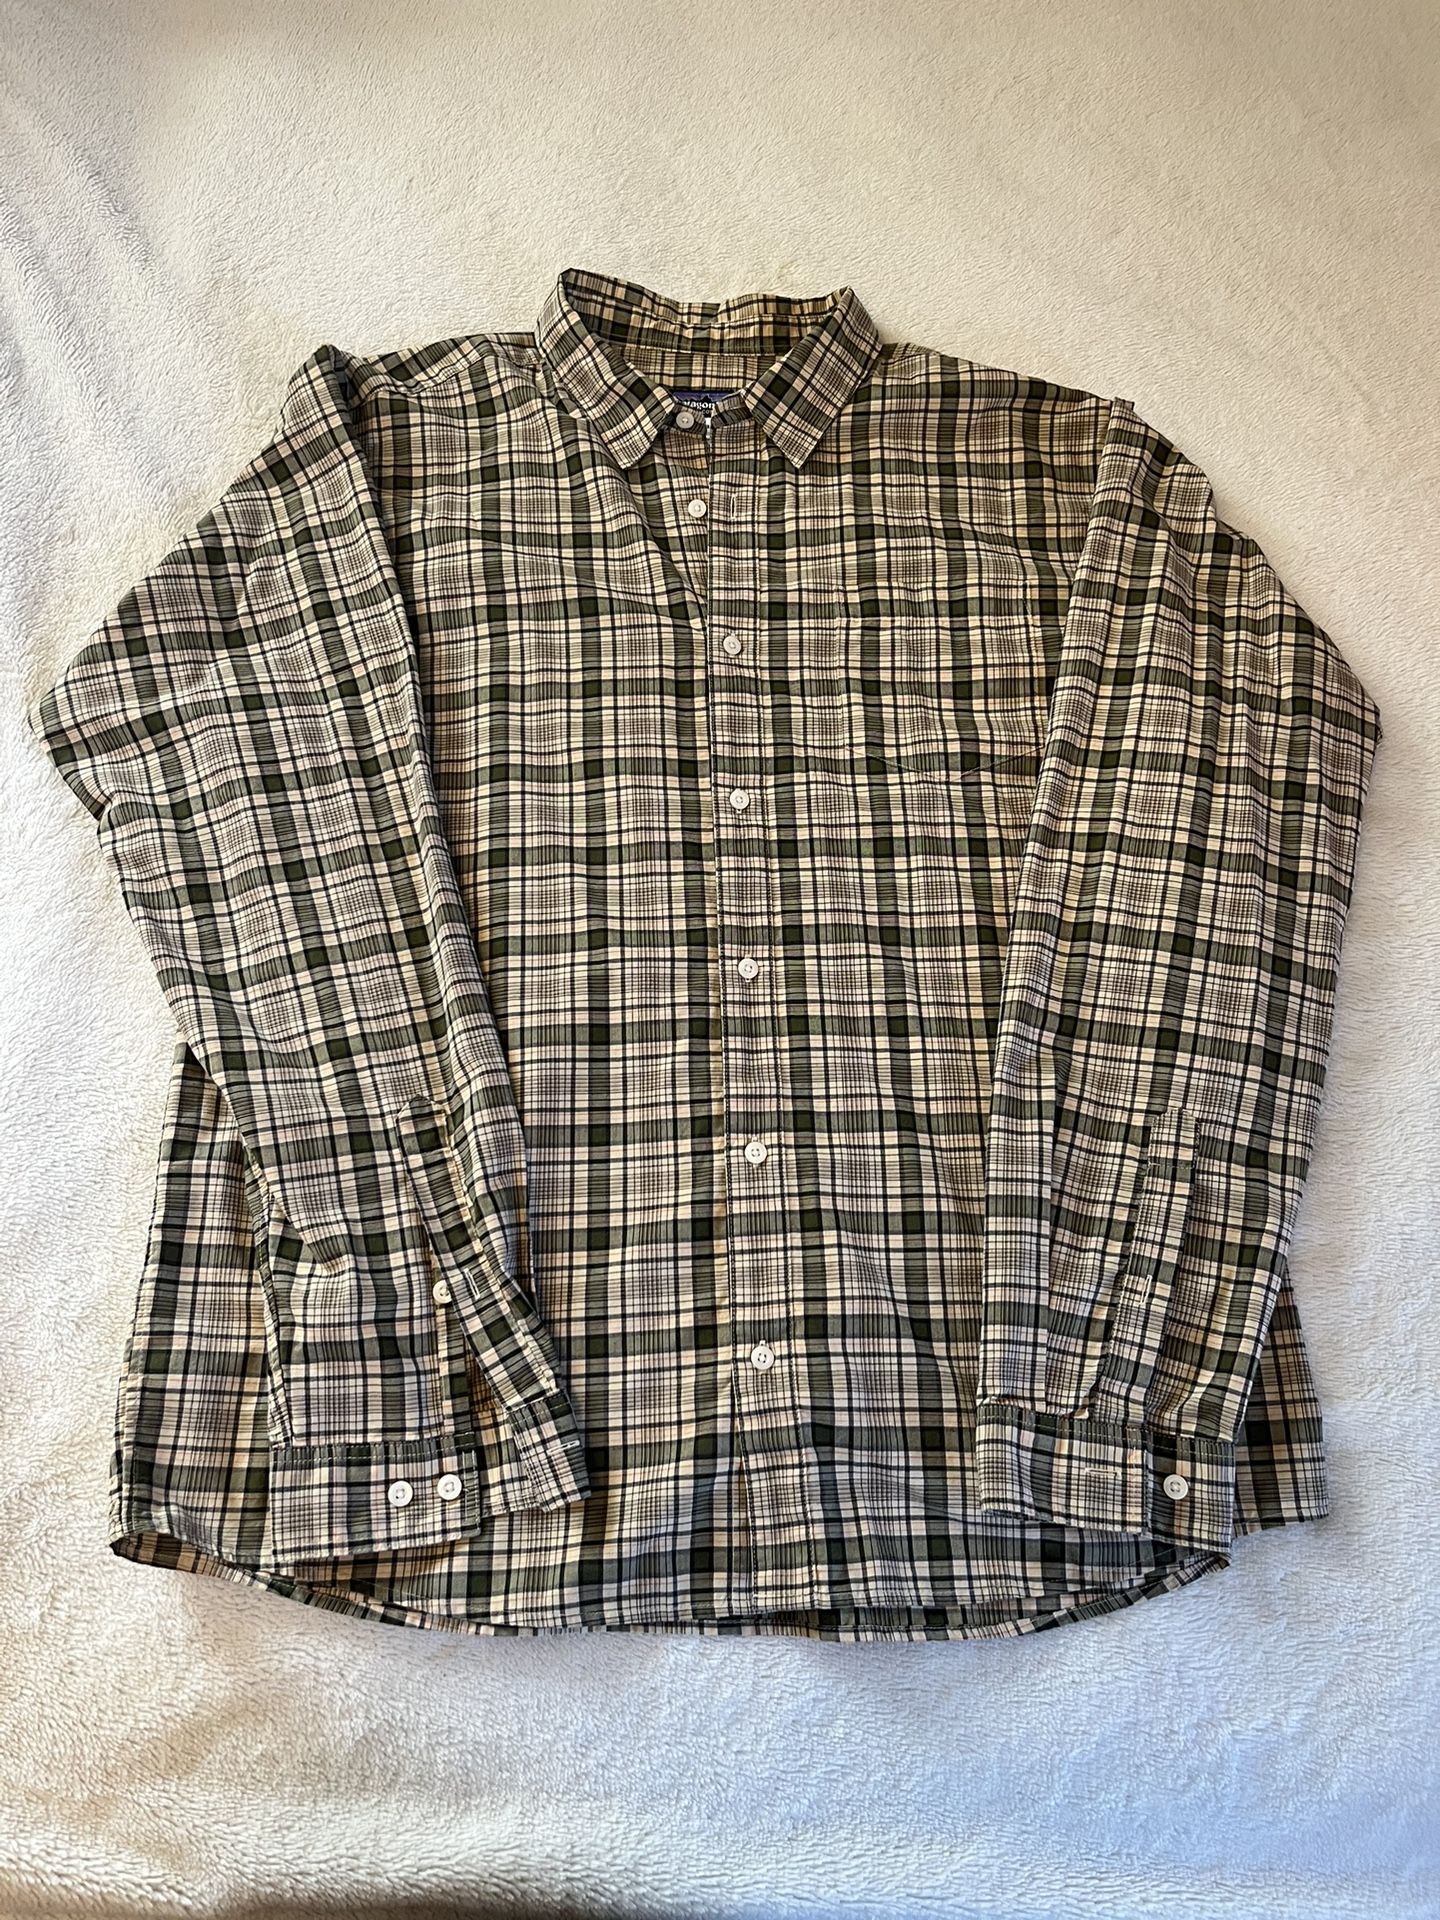 Patagonia Mens Multicolor Plaid Cotton Blend Long Sleeve Button Up Shirt Size XL